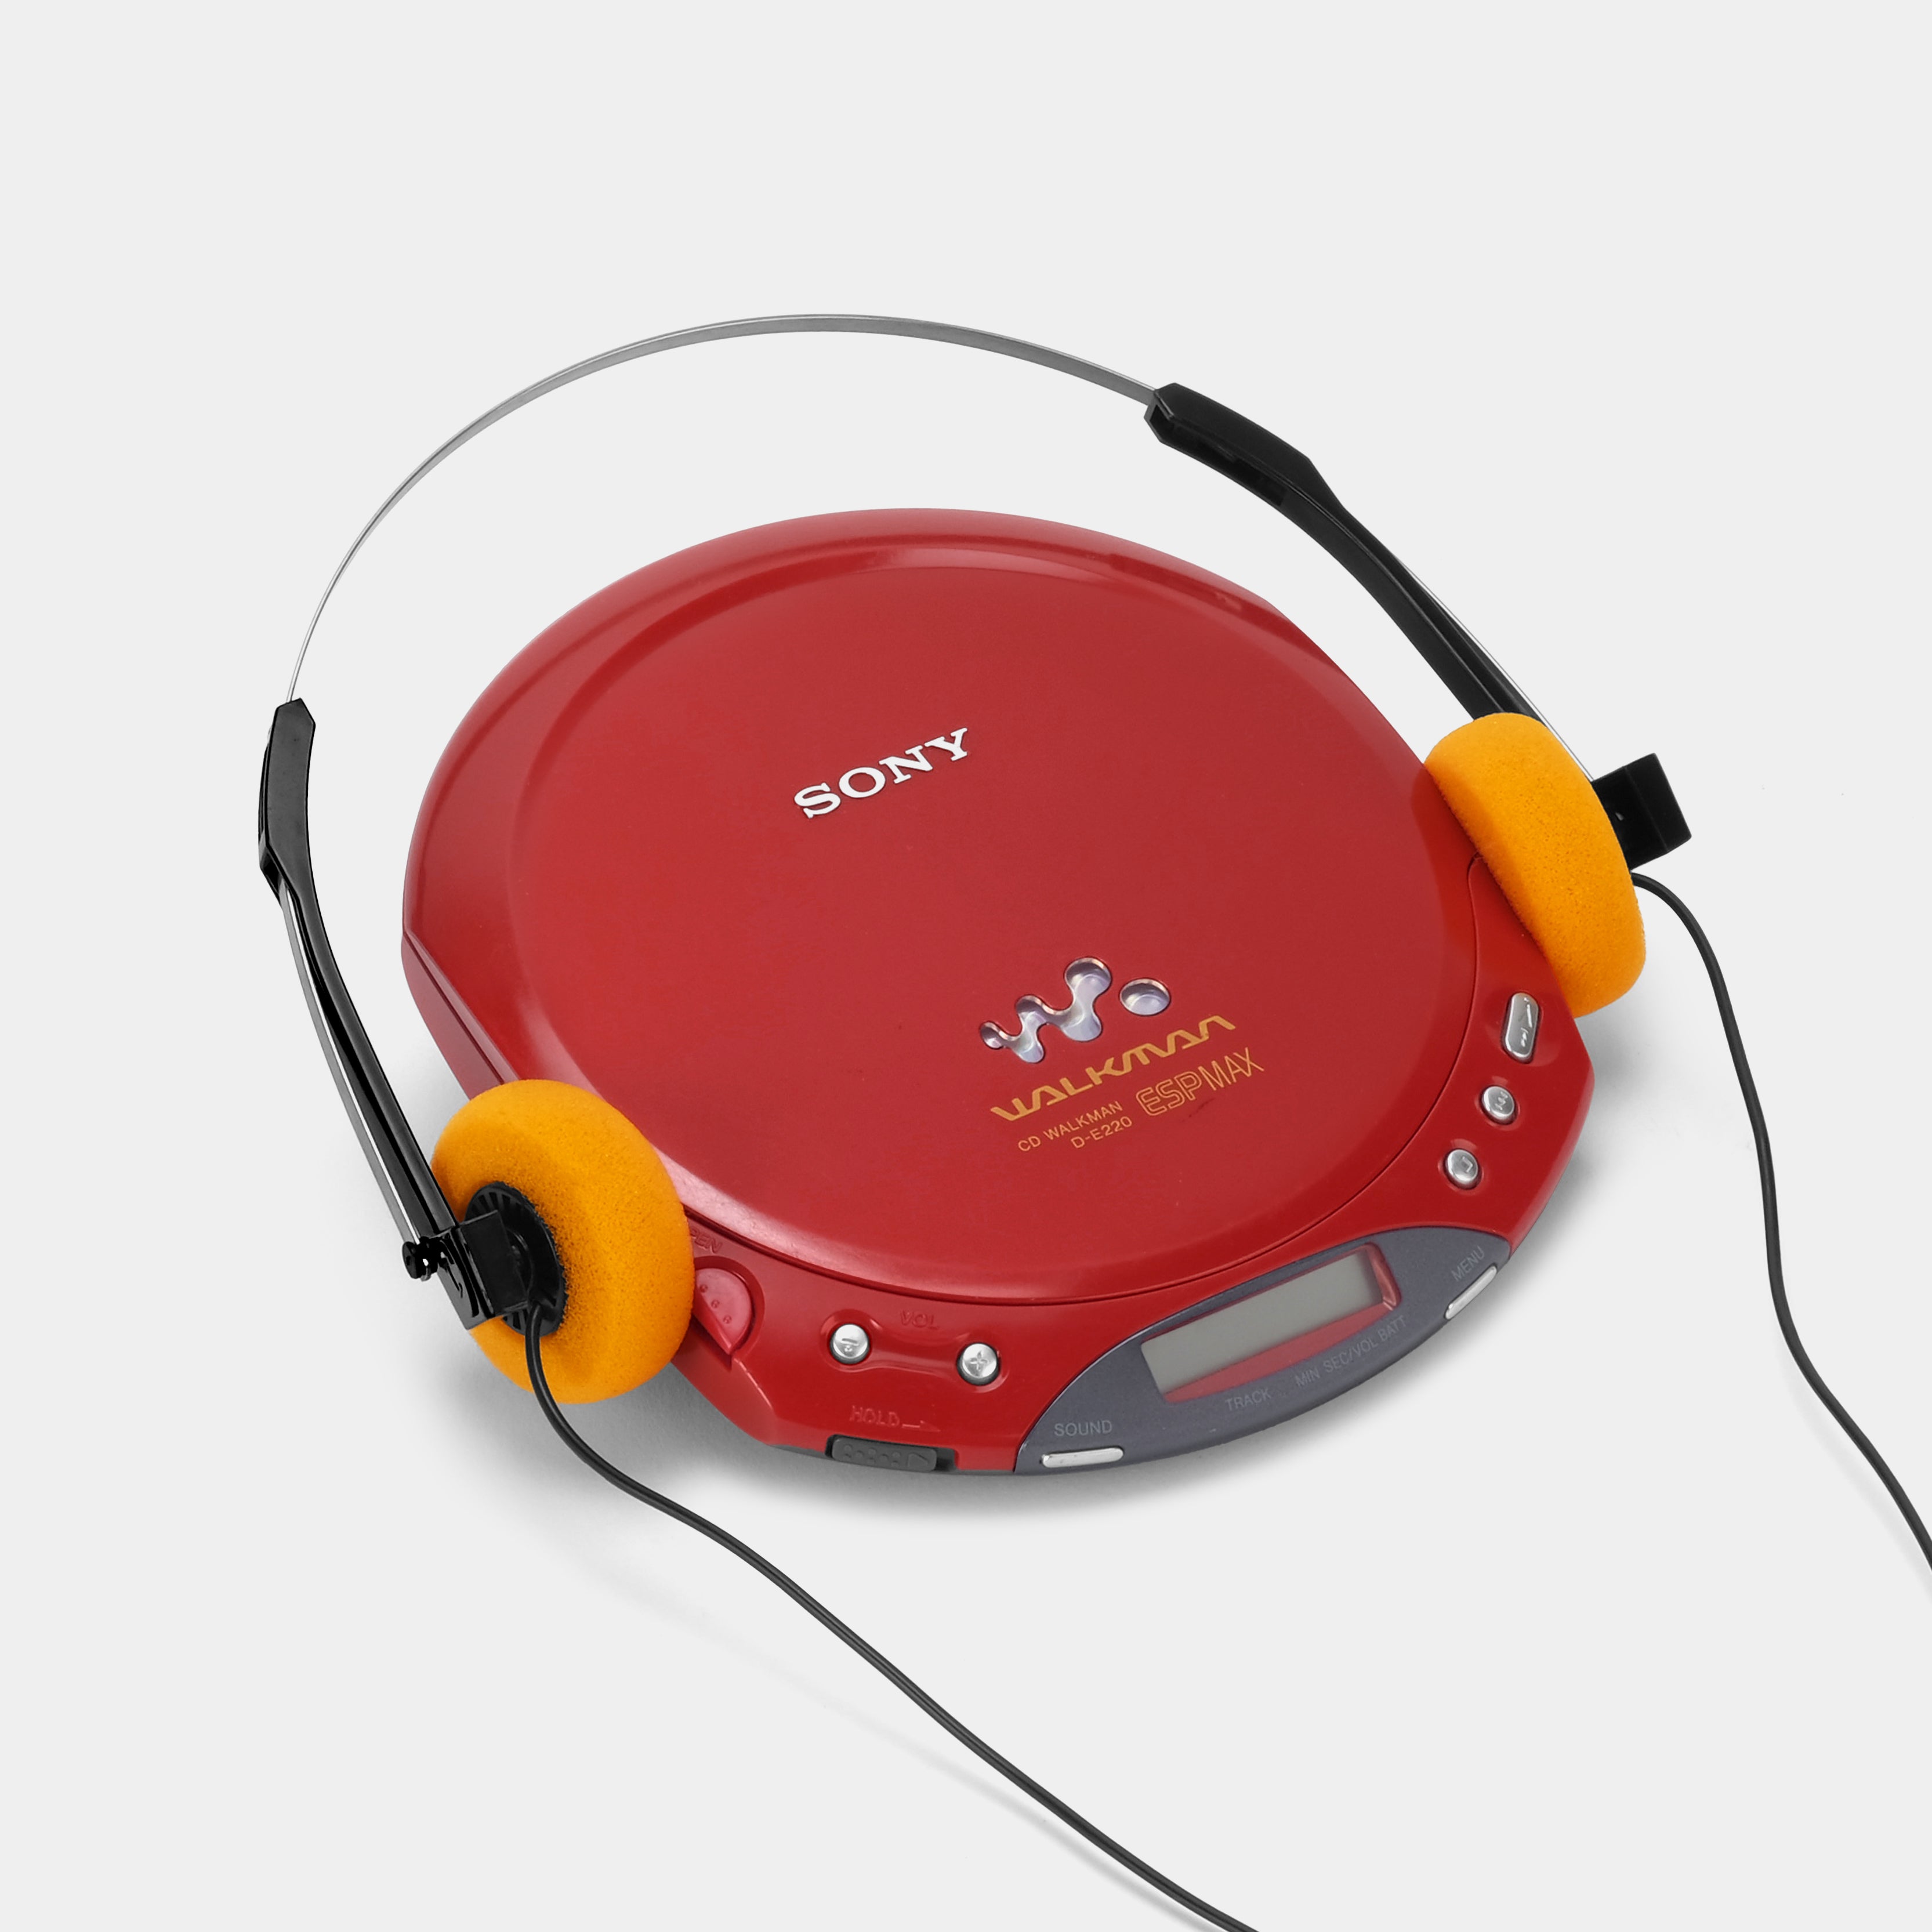 Sony Walkman D-E220 Portable CD Player